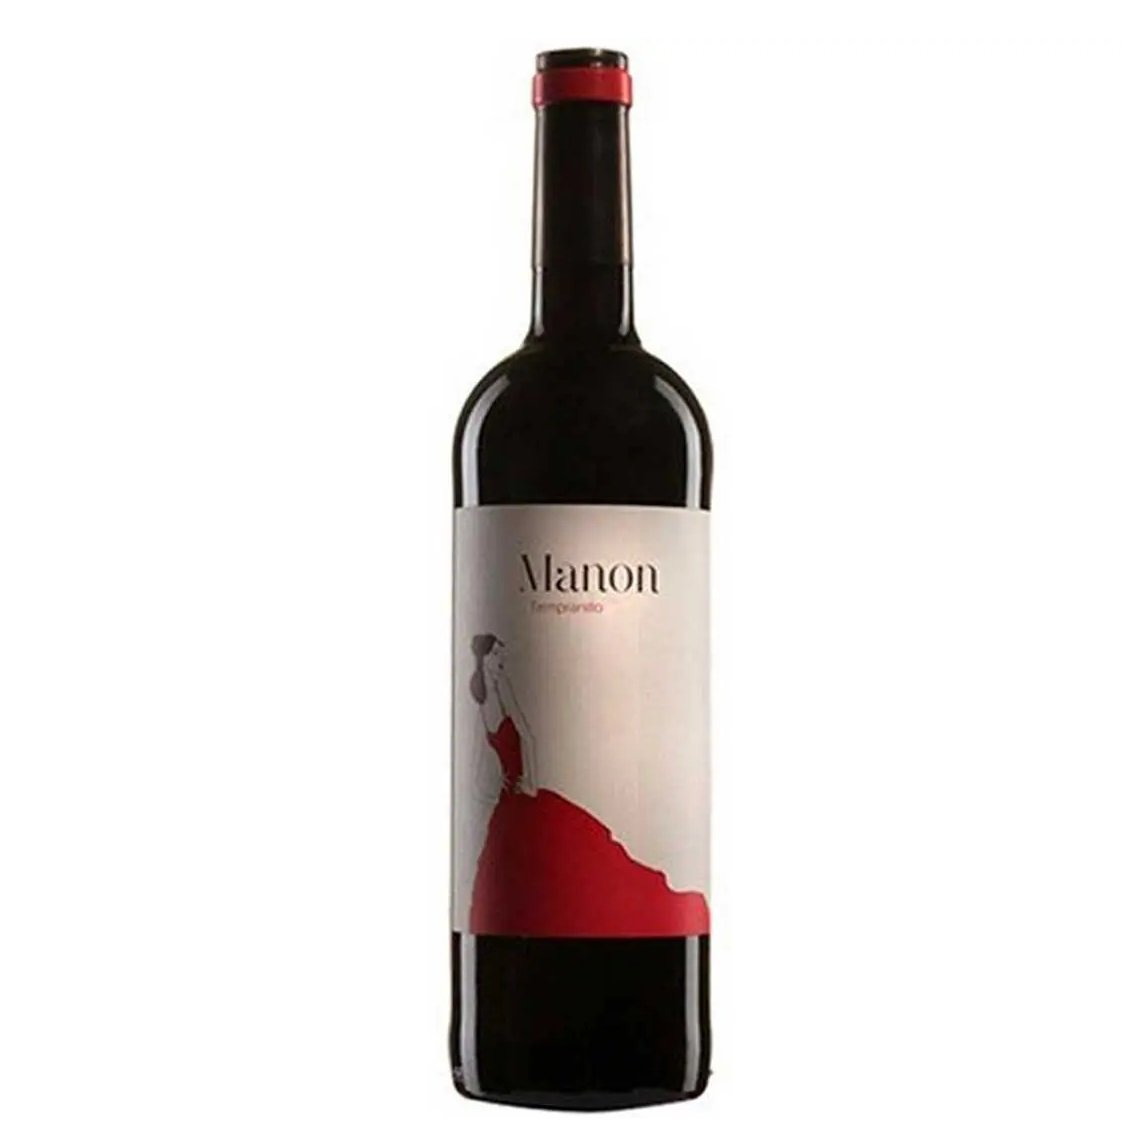 Вино Mano А Mano Manon Tempranillo, красное, сухое, 0,75 л - фото 1